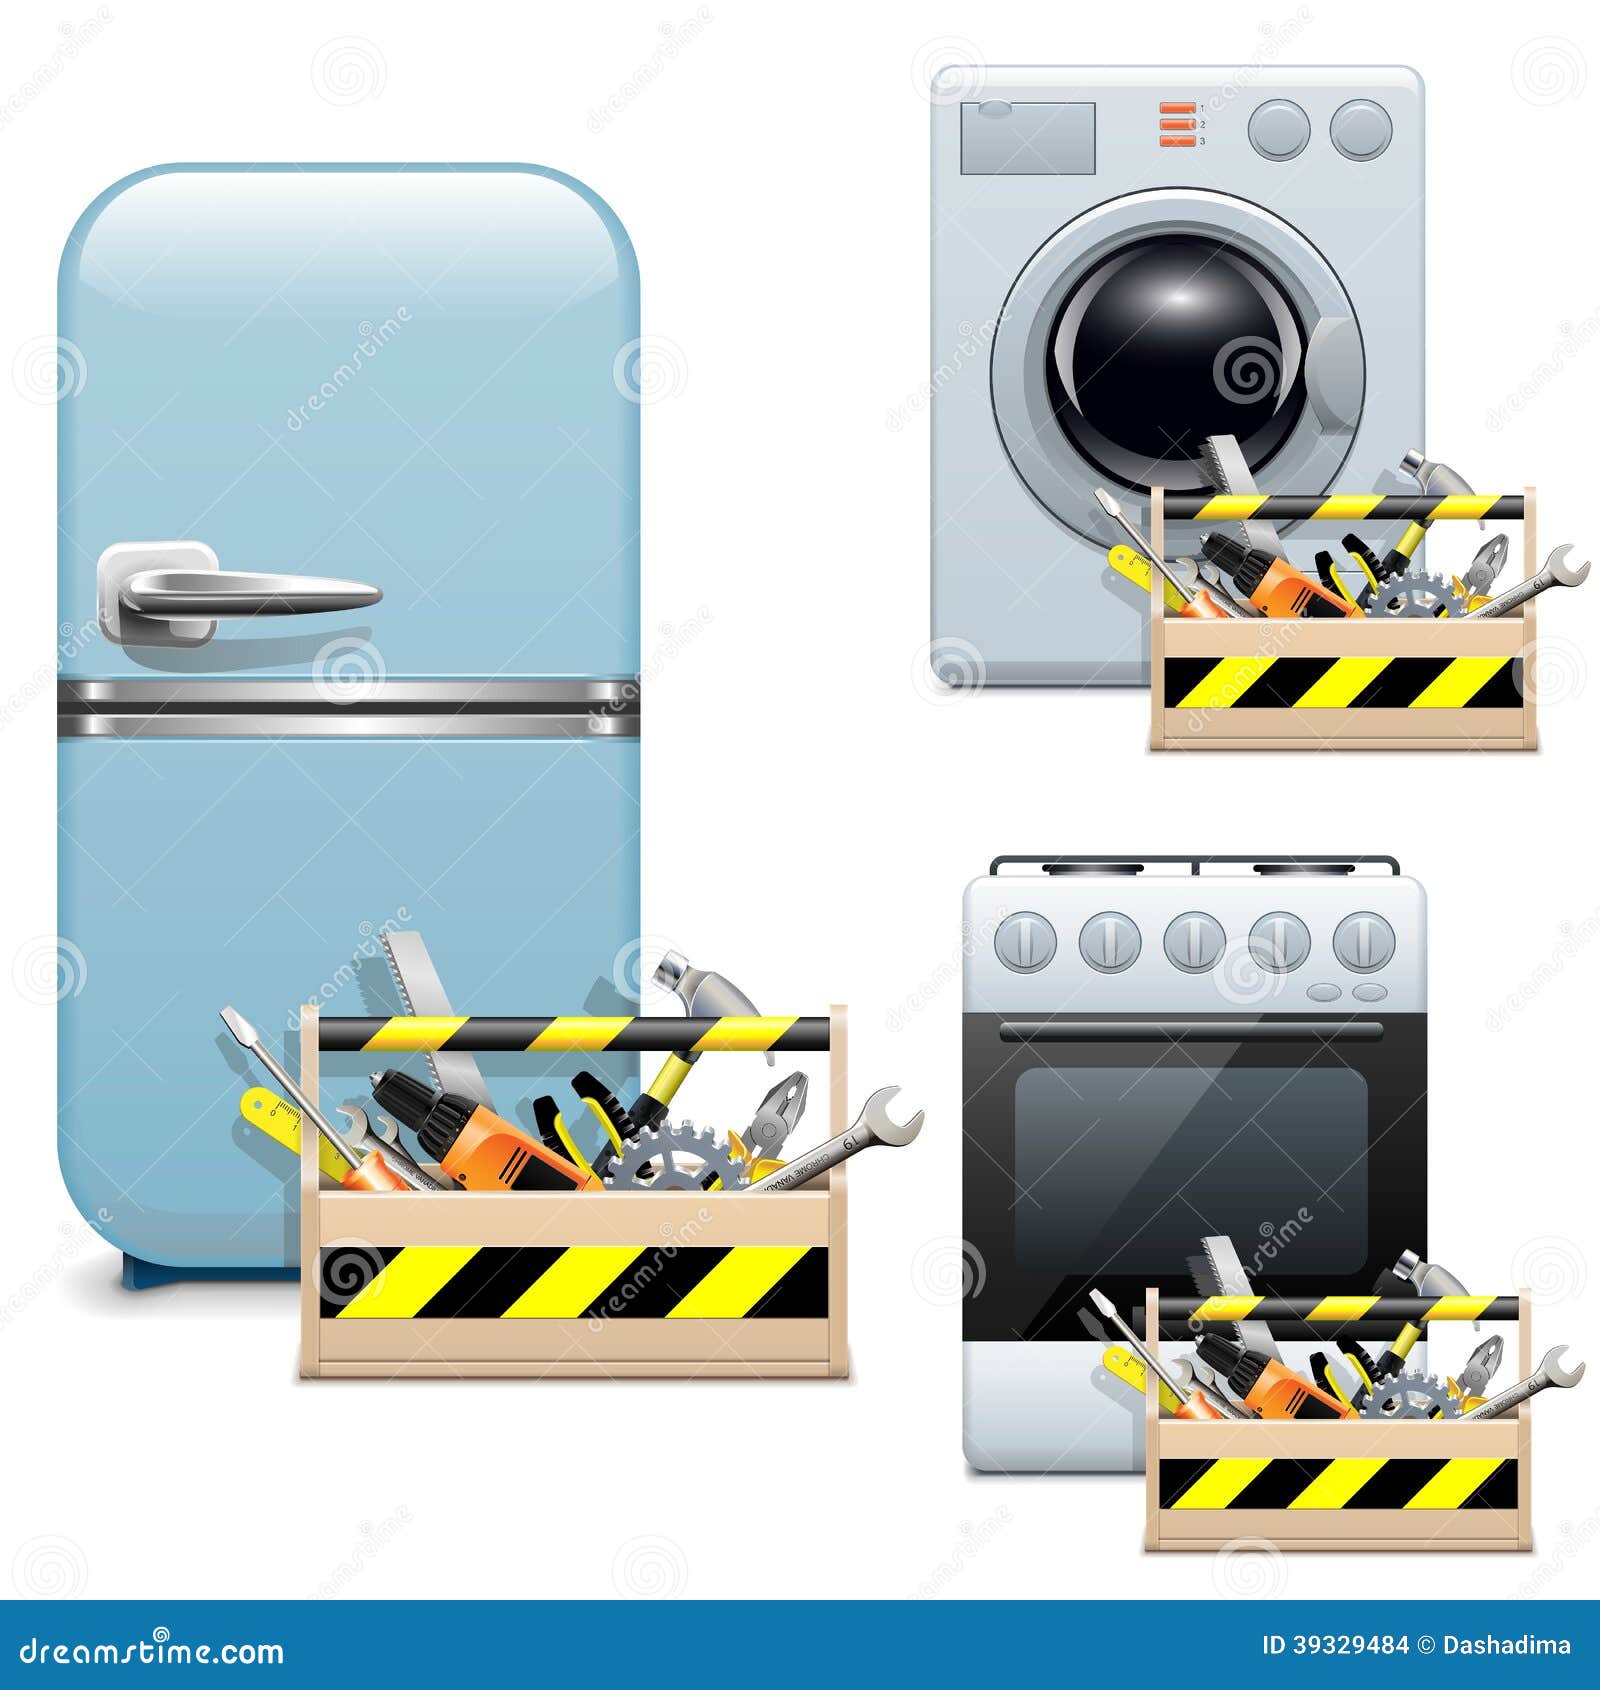 Sub Zero Sealed System Repair Dependable Refrigeration & Appliance Repair Service